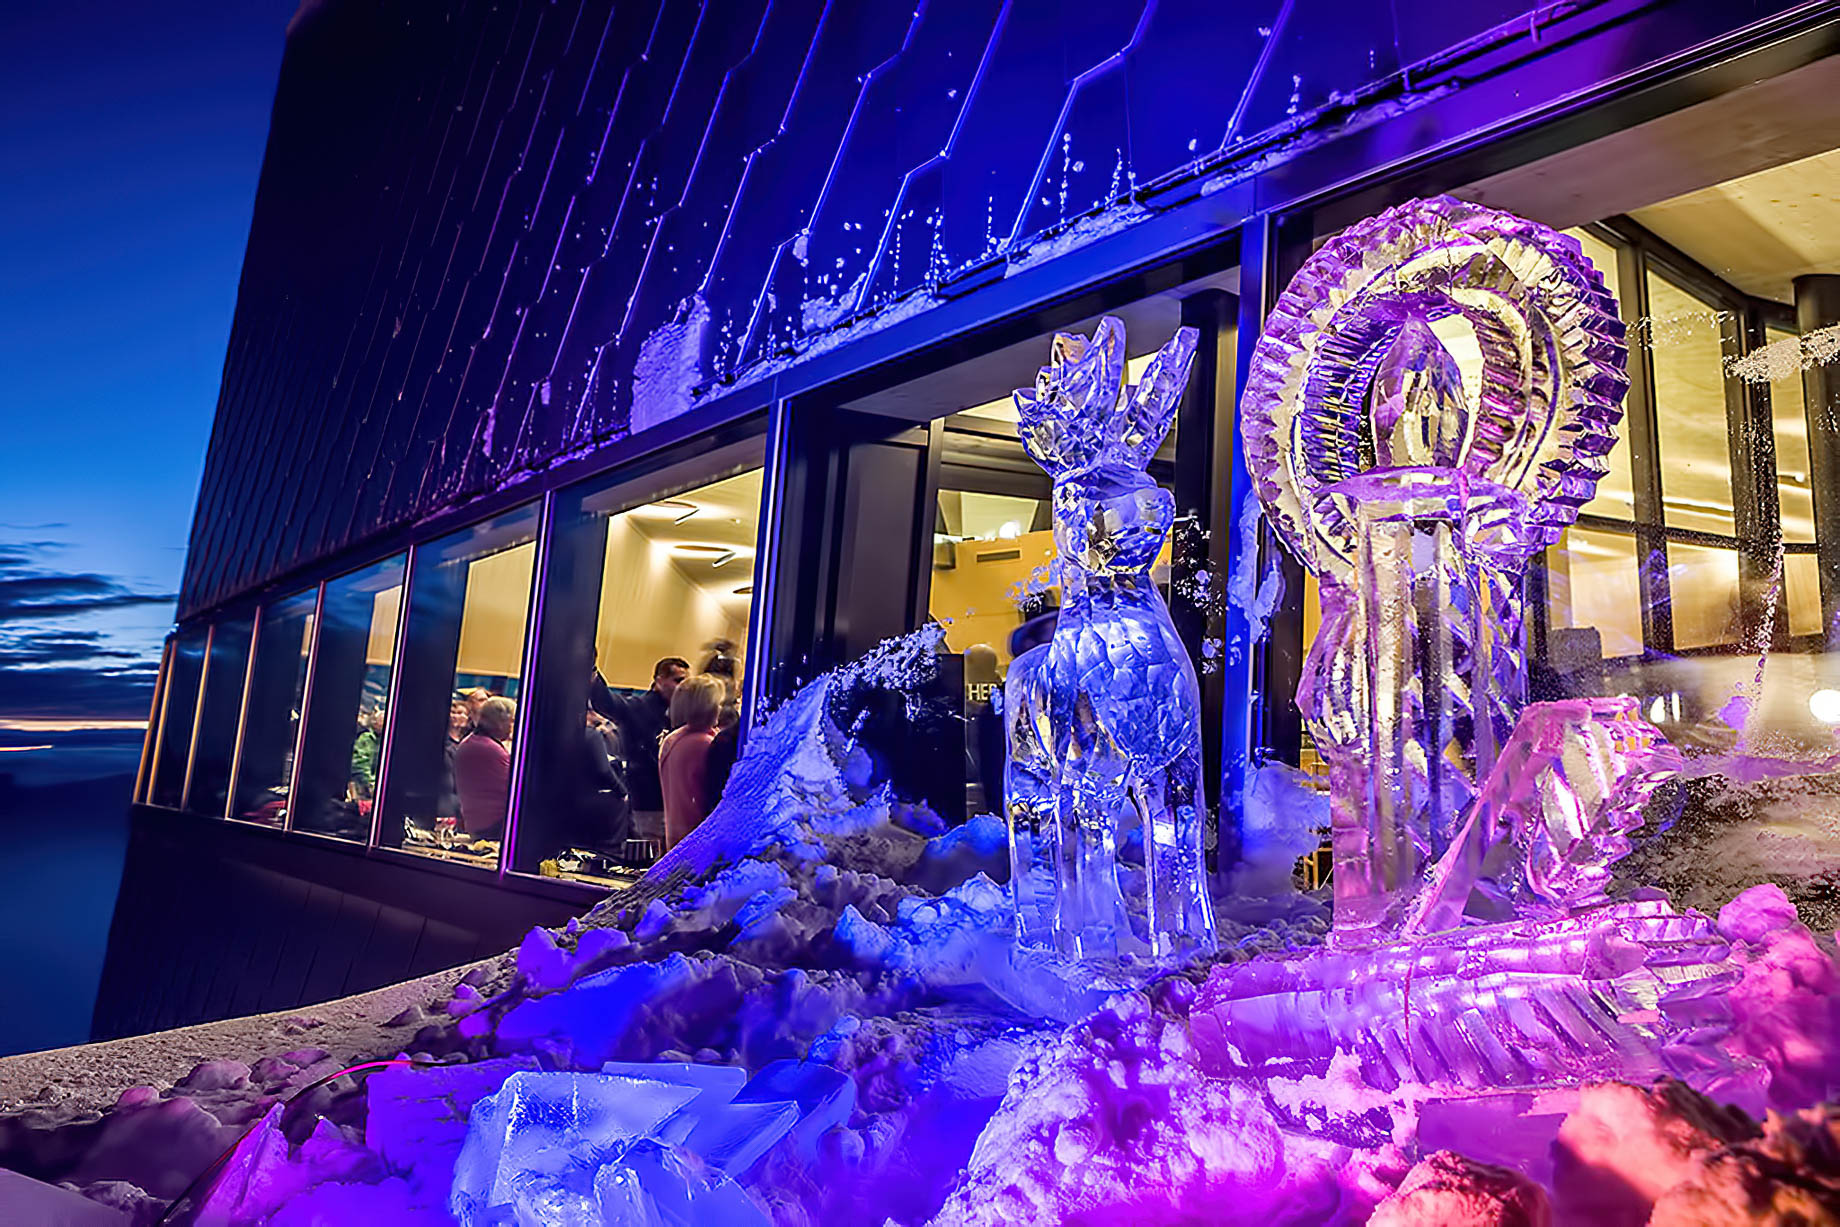 Tschuggen Grand Hotel – Arosa, Switzerland – Ice Sculptures